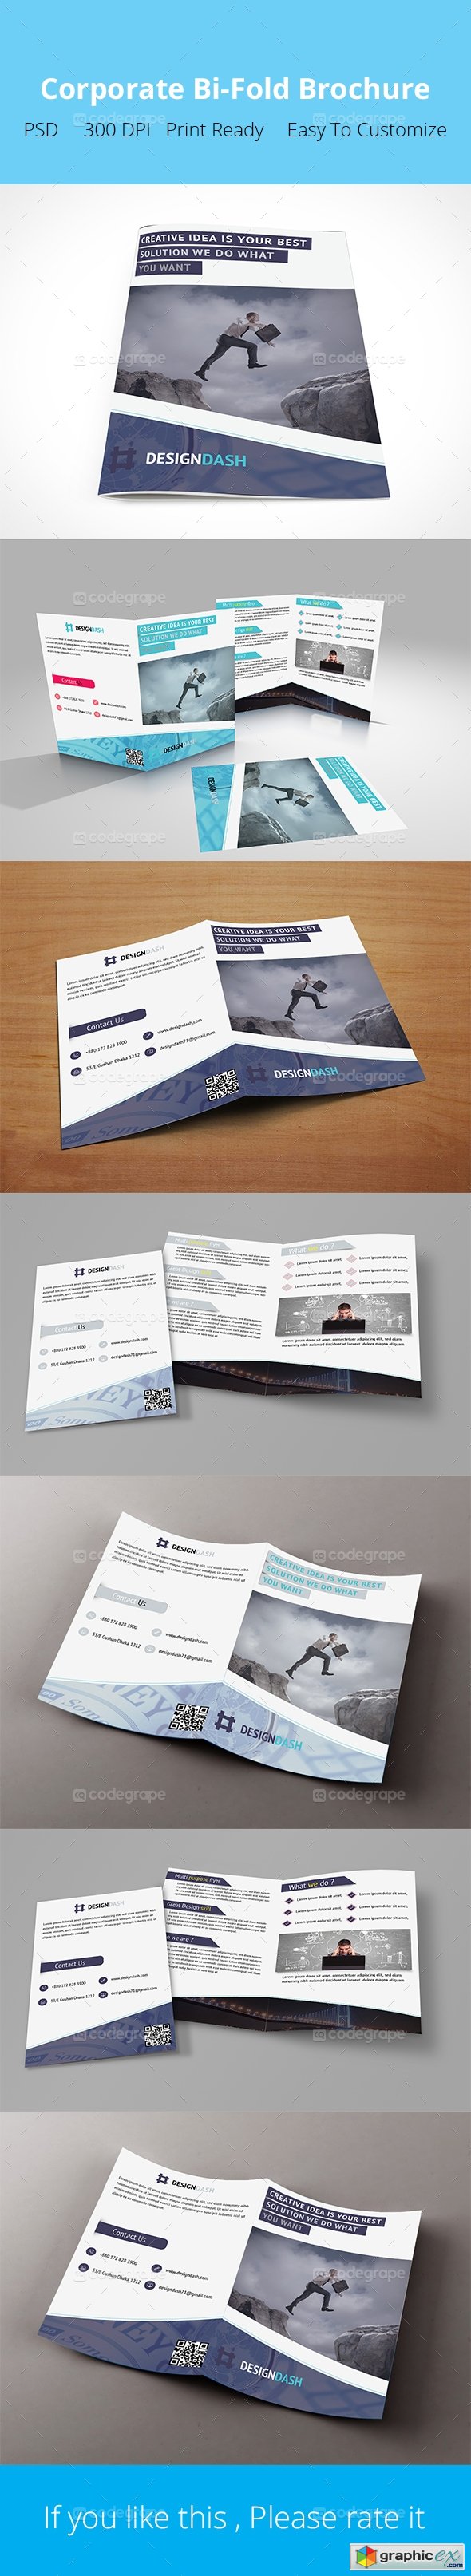 Design Agency Bi-Fold Brochure